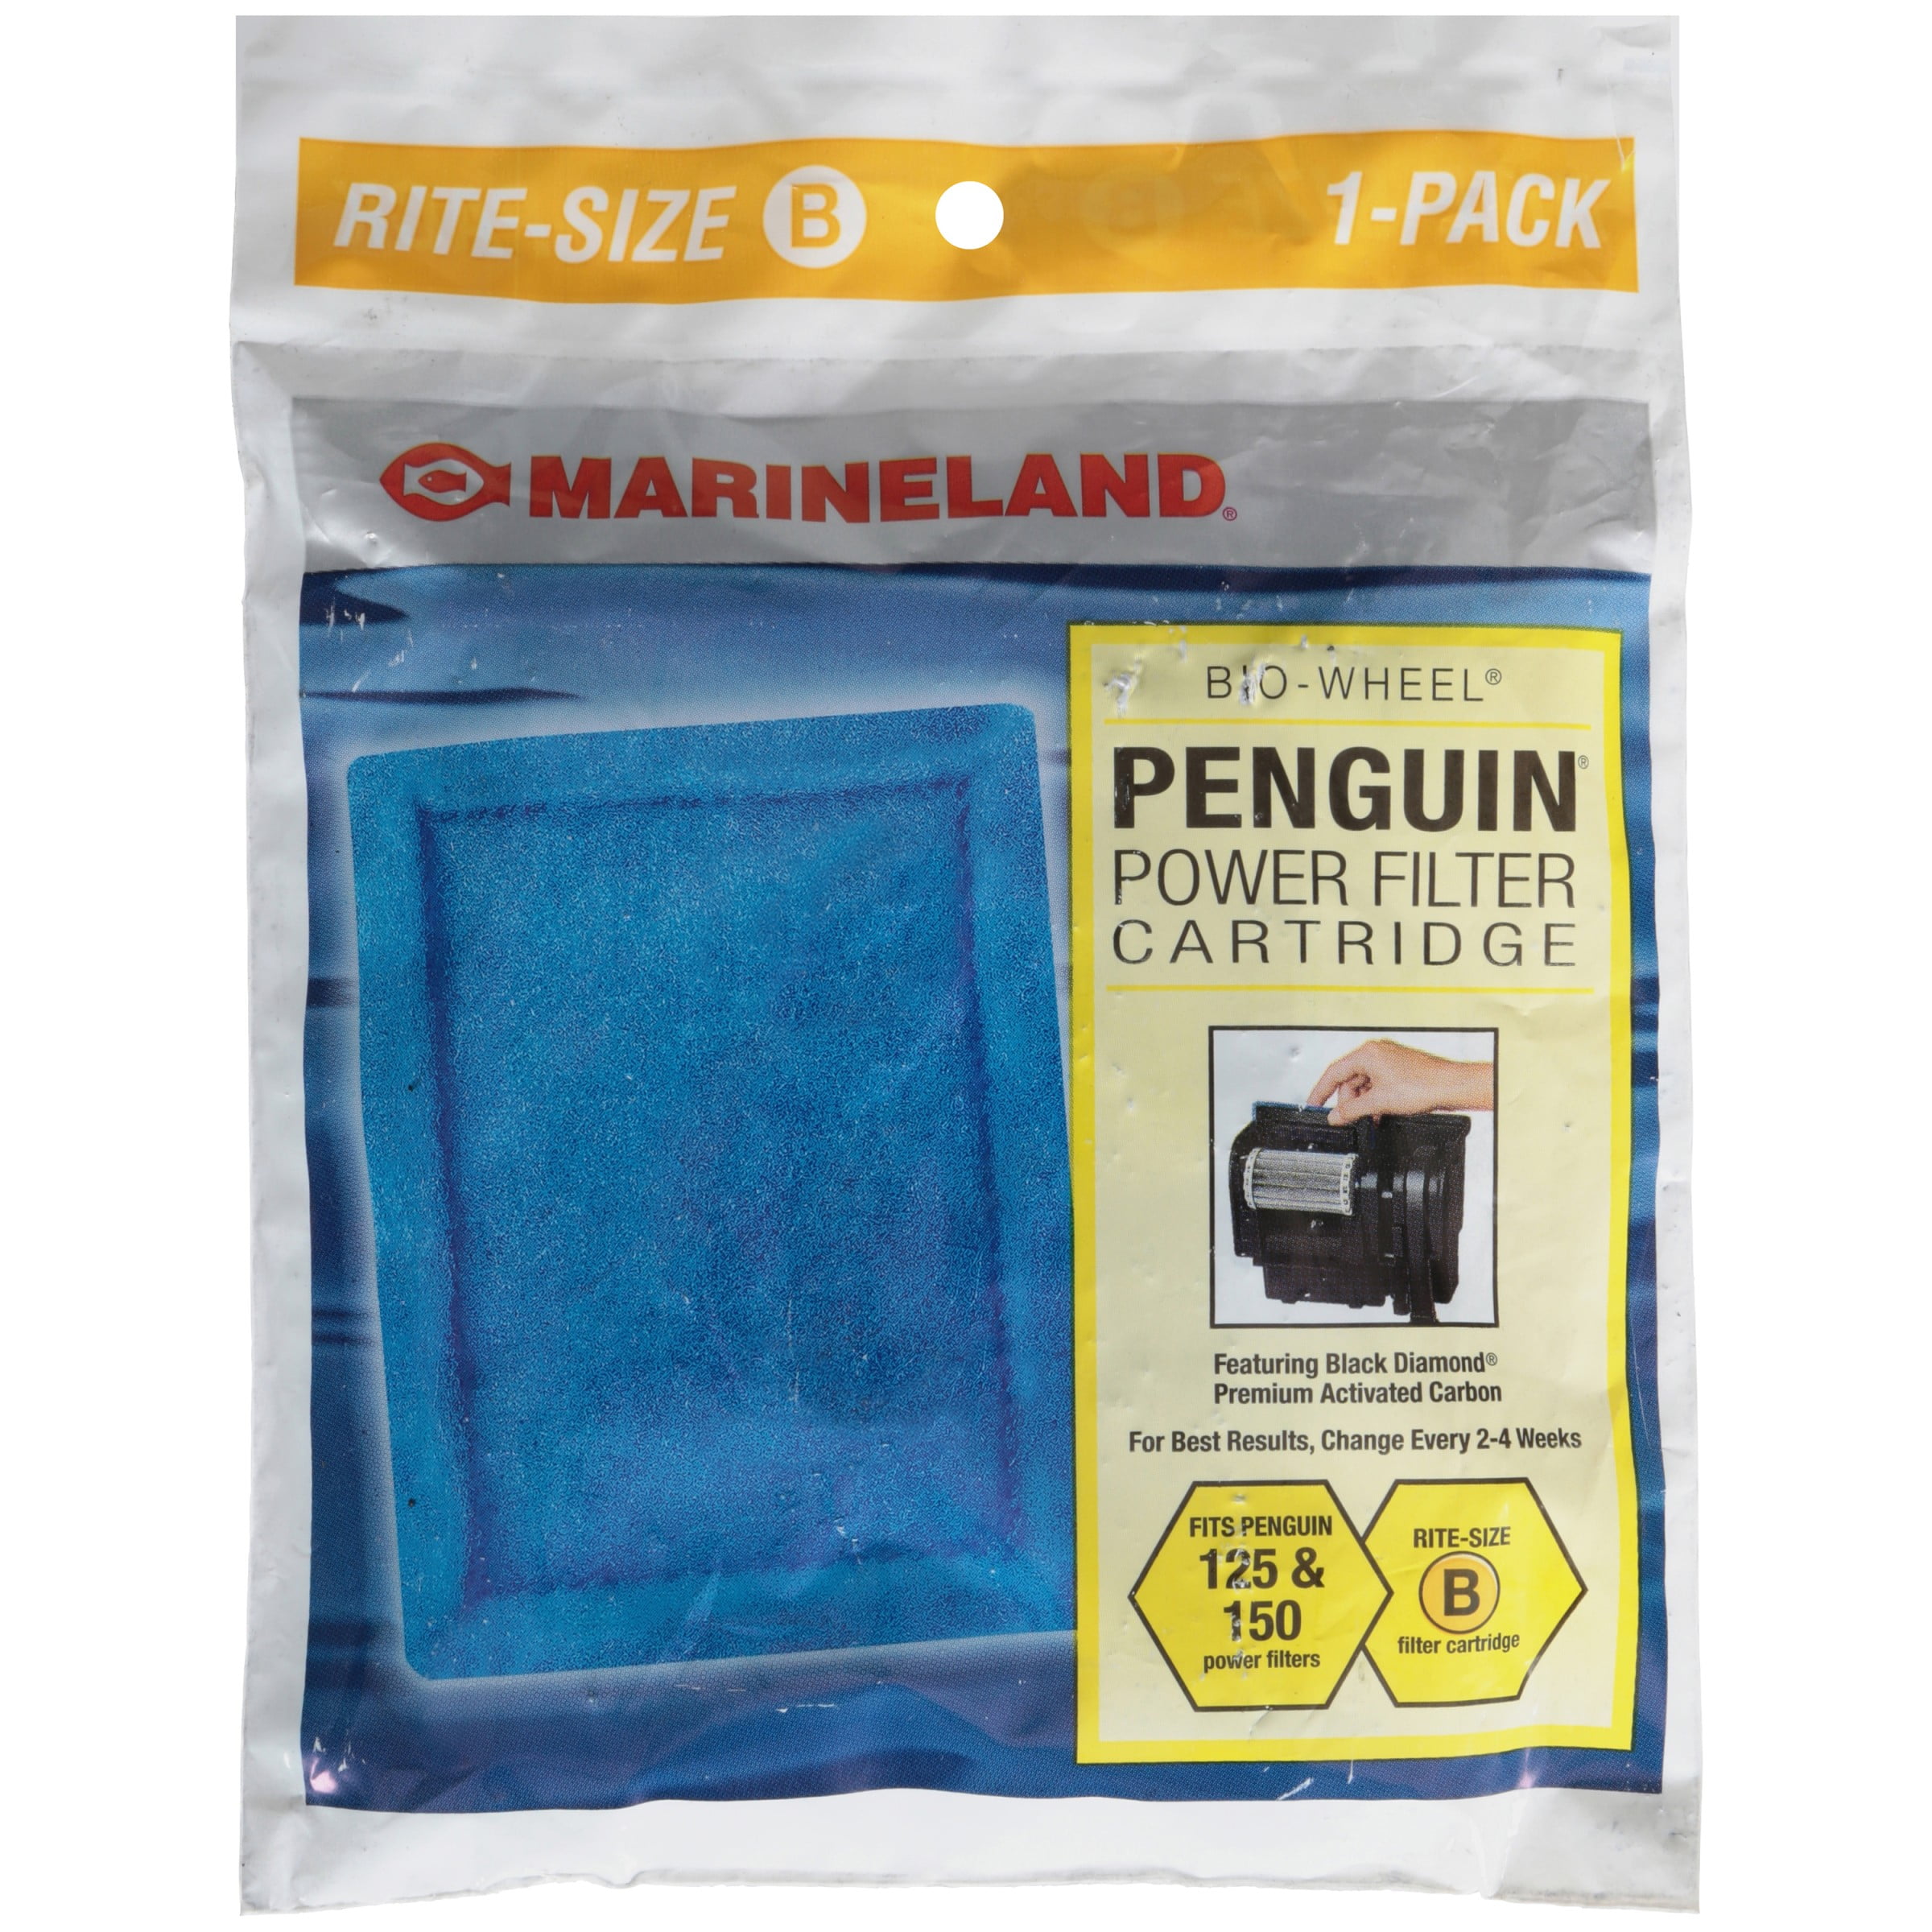 MarineLand Penguin Rite-Size Cartridge 